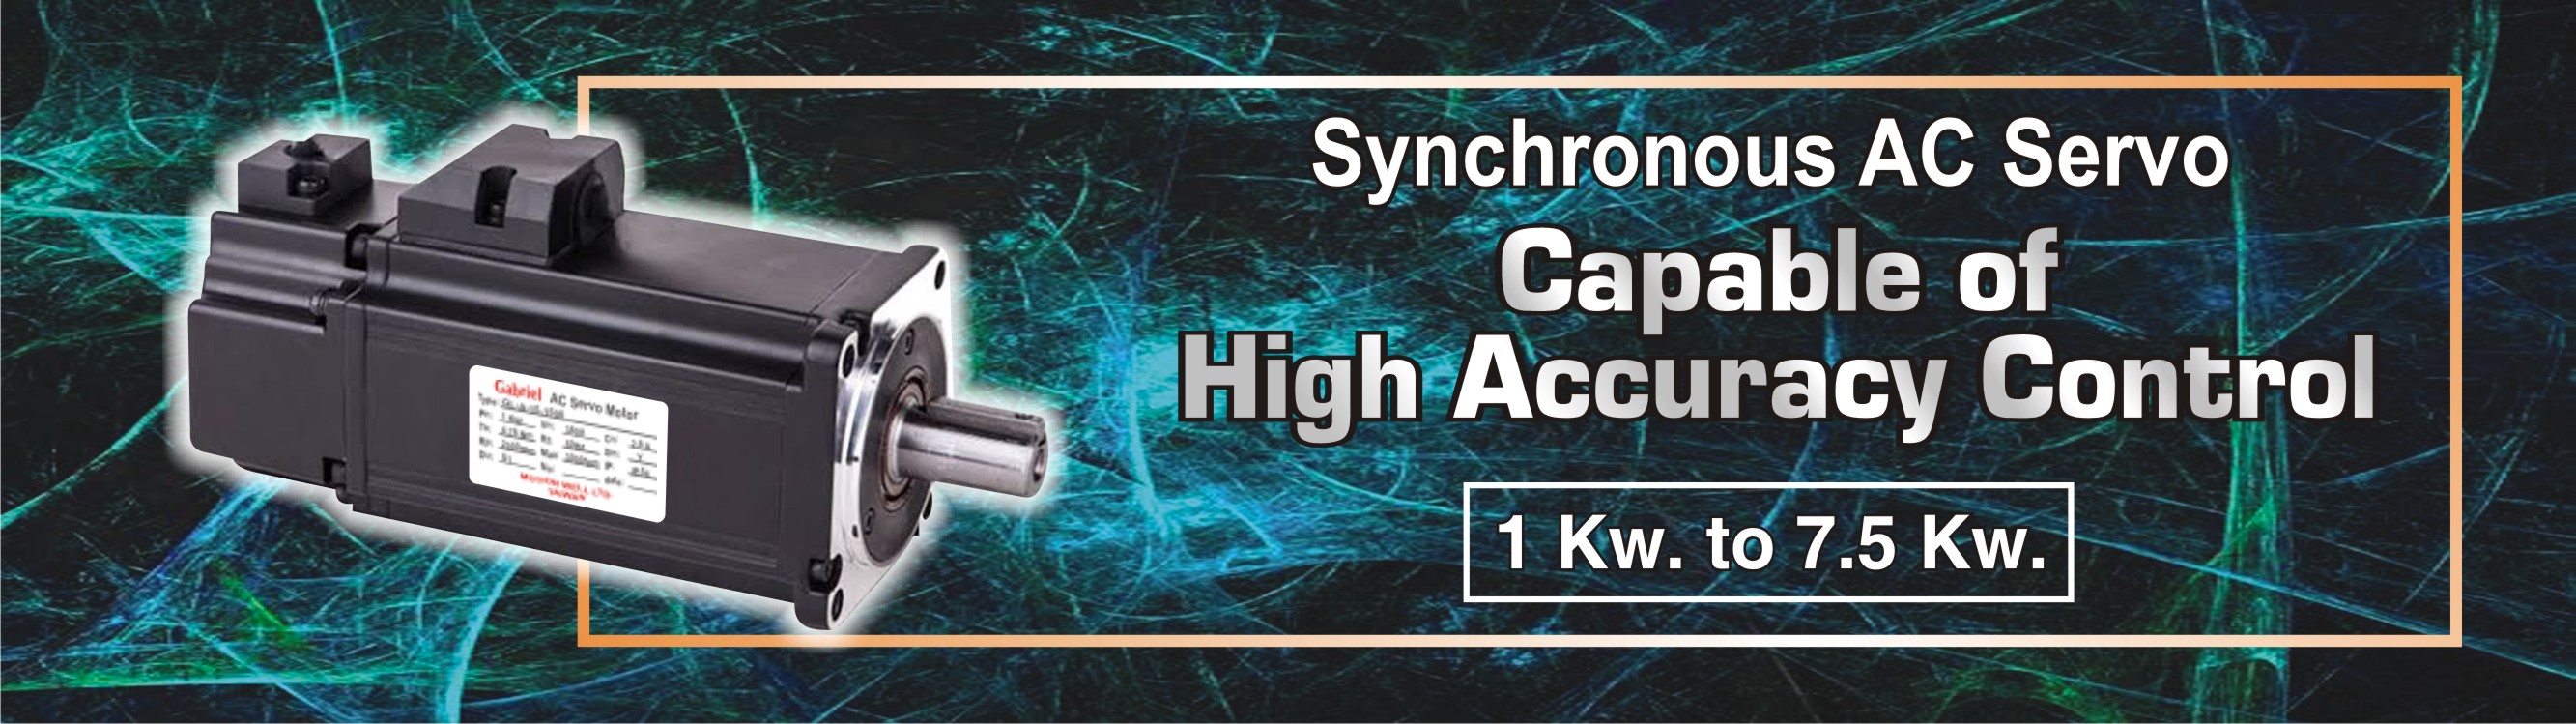 Synchronous AC Servo - High Accuracy Control - Motion Well LTD